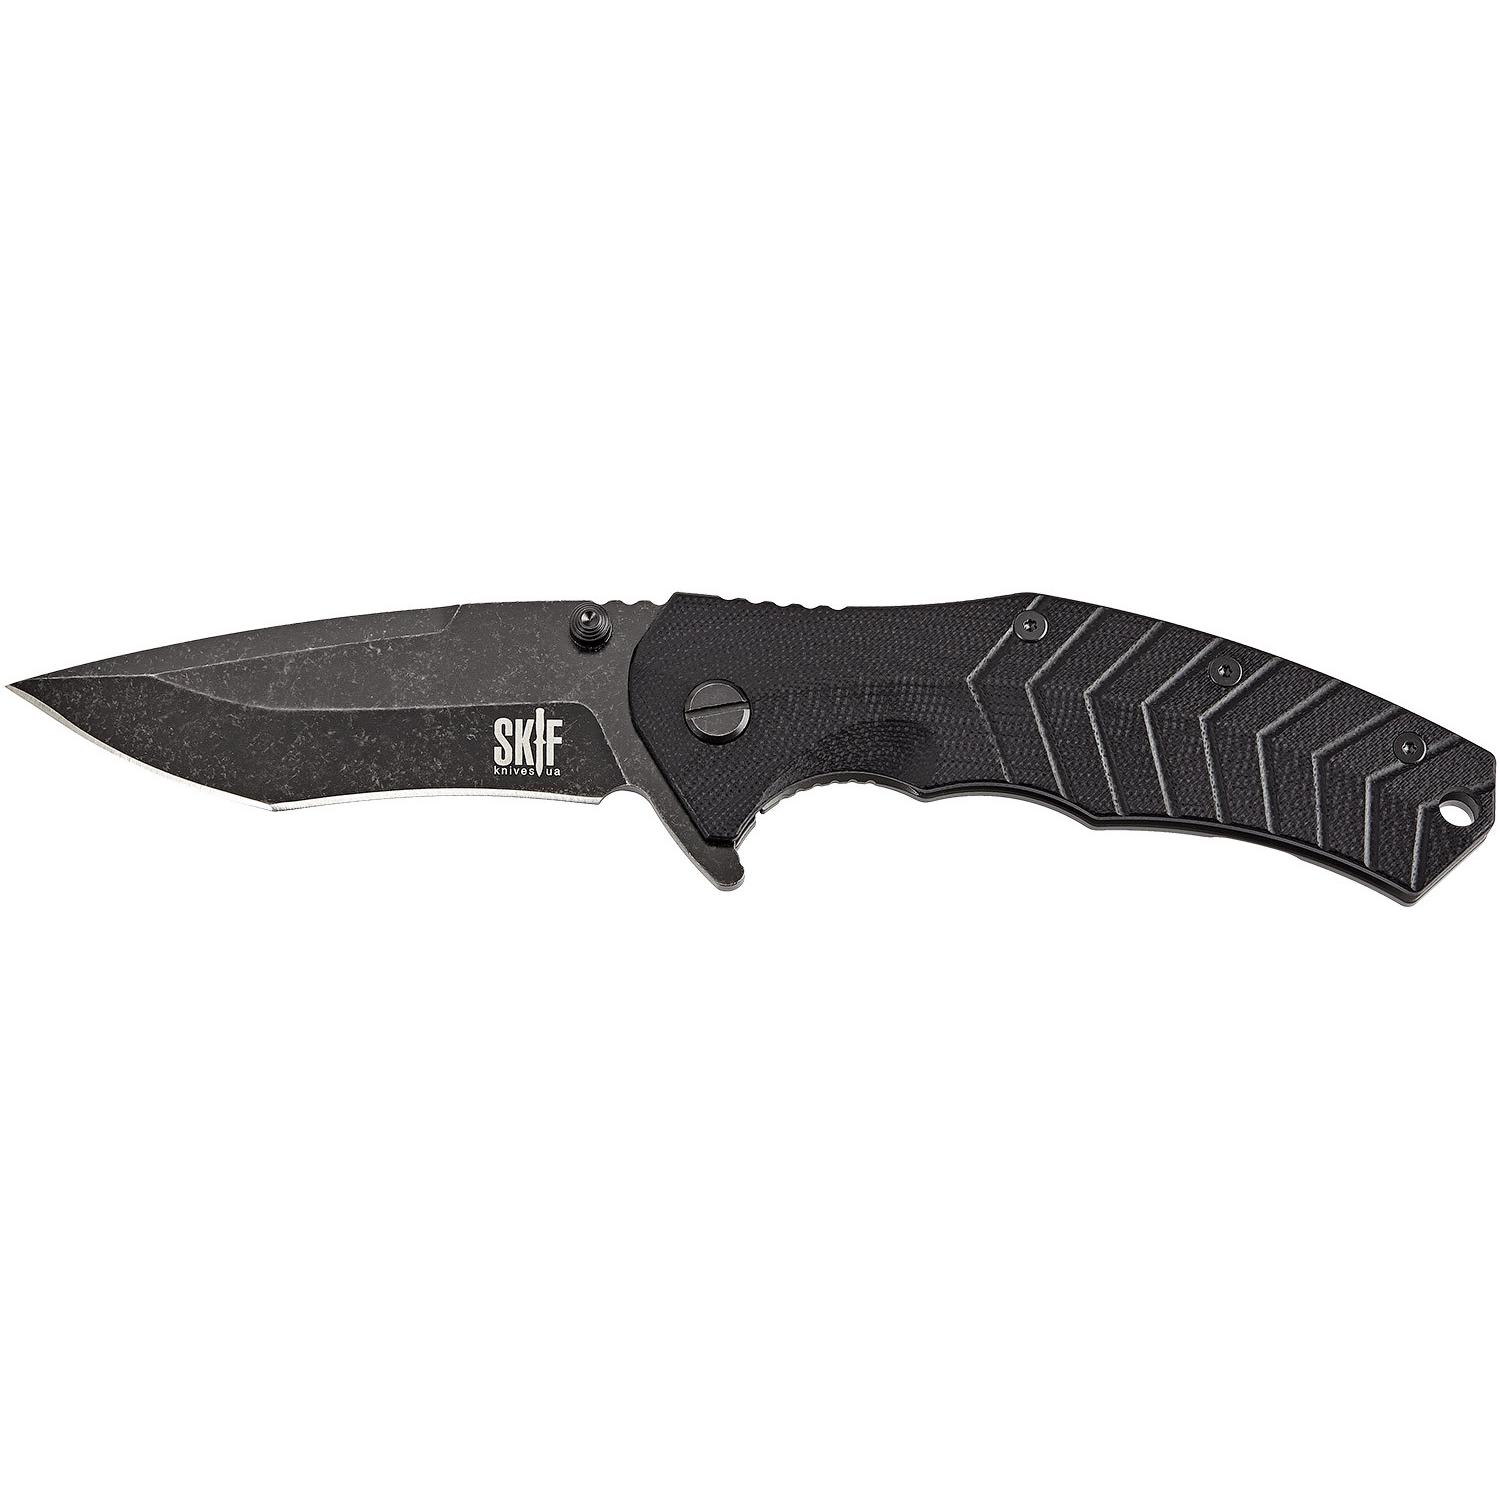 Нож Skif Griffin II BSW Black 422SEB 1765.02.87